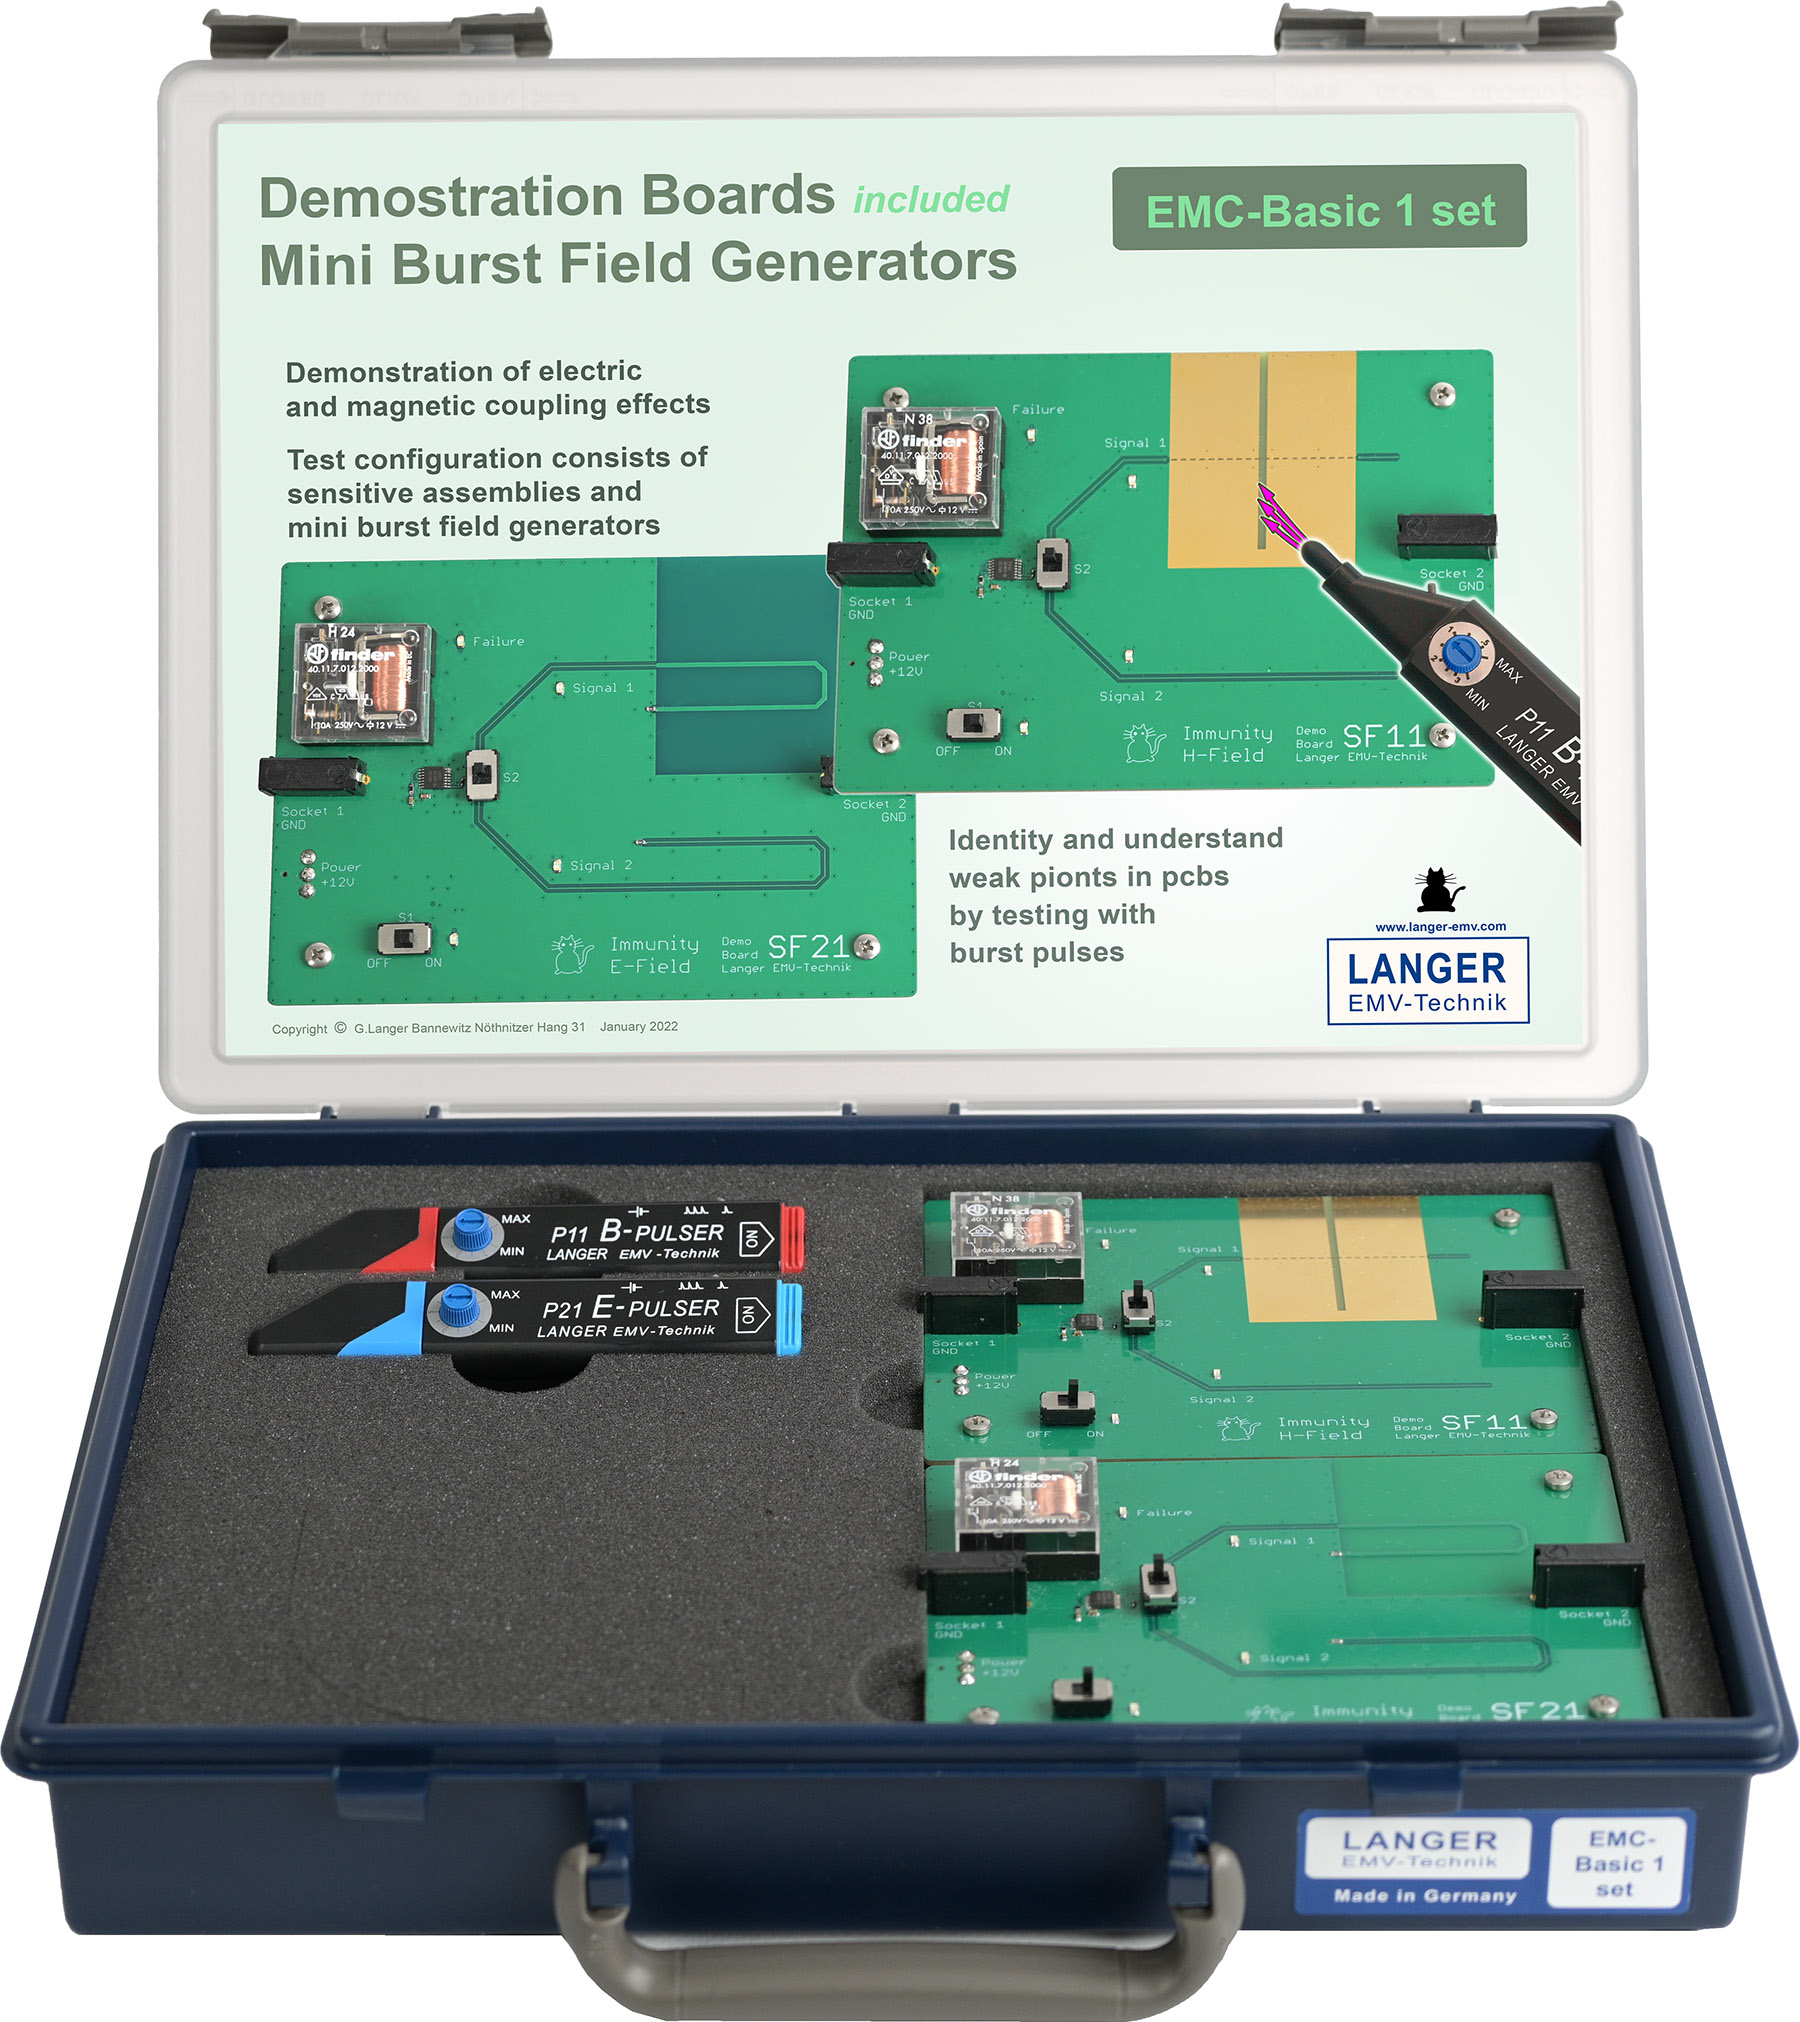 EMC-Basic 1 set, Demonstration Boards Mini Burst Field Generators